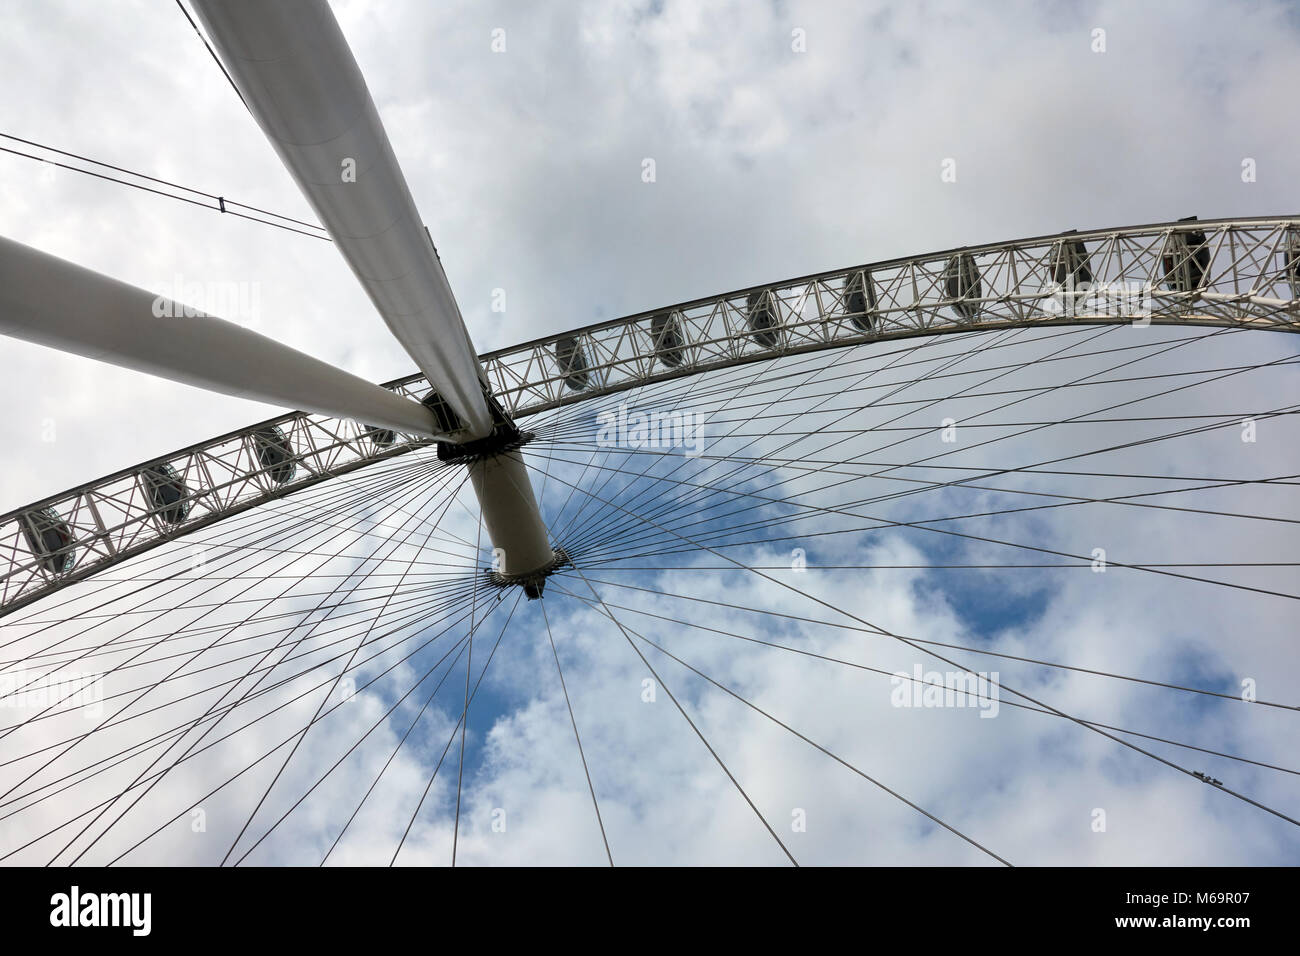 Great Ferris wheel in London. Bottom view. Stock Photo